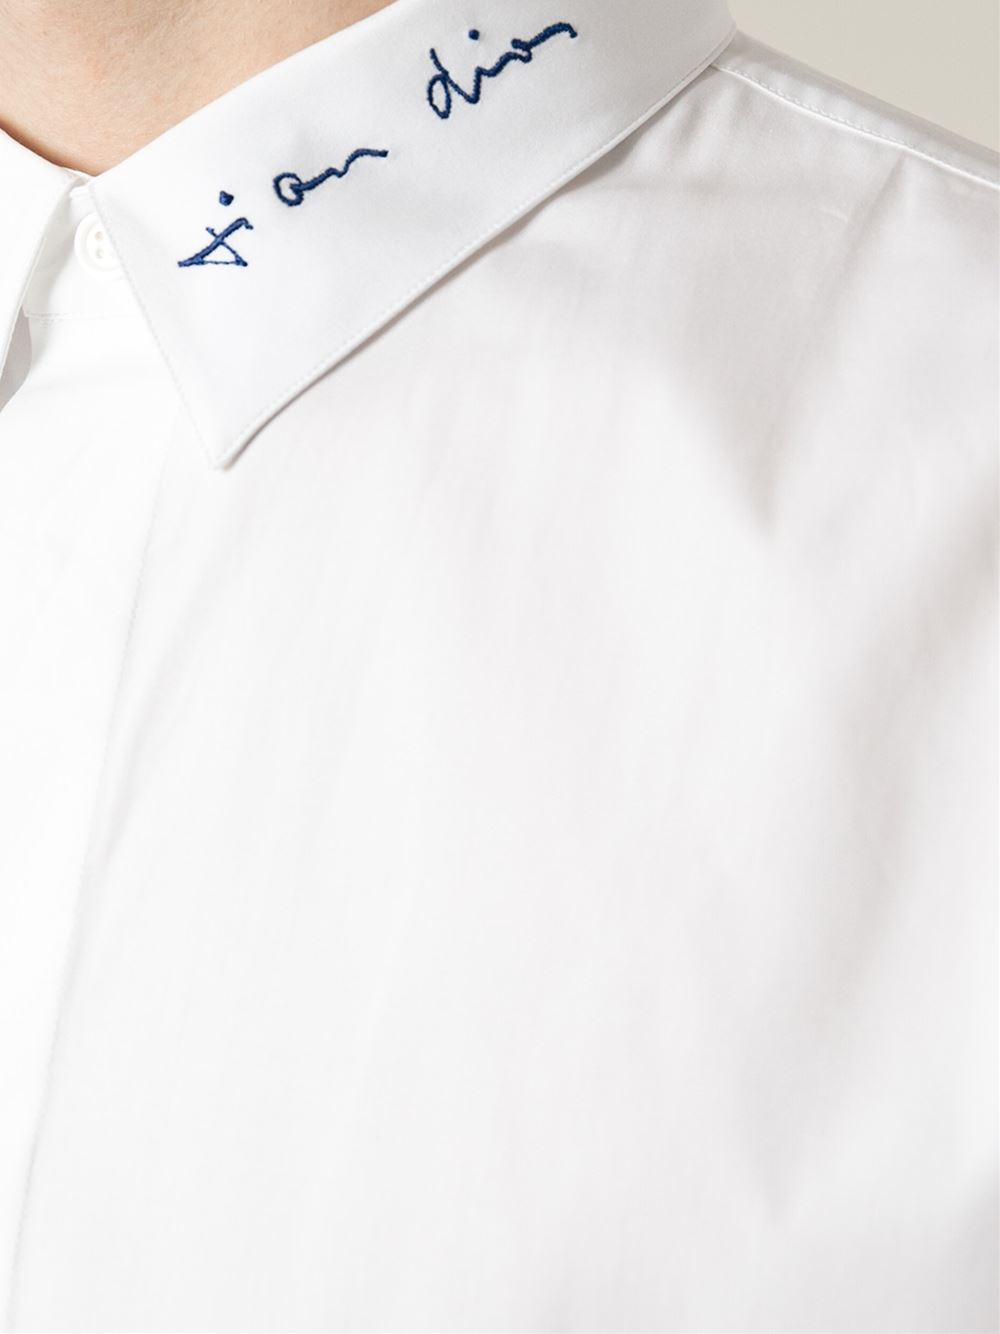 Weaken Reassure Instruct Dior Homme Embroidered Collar Shirt in White for Men | Lyst